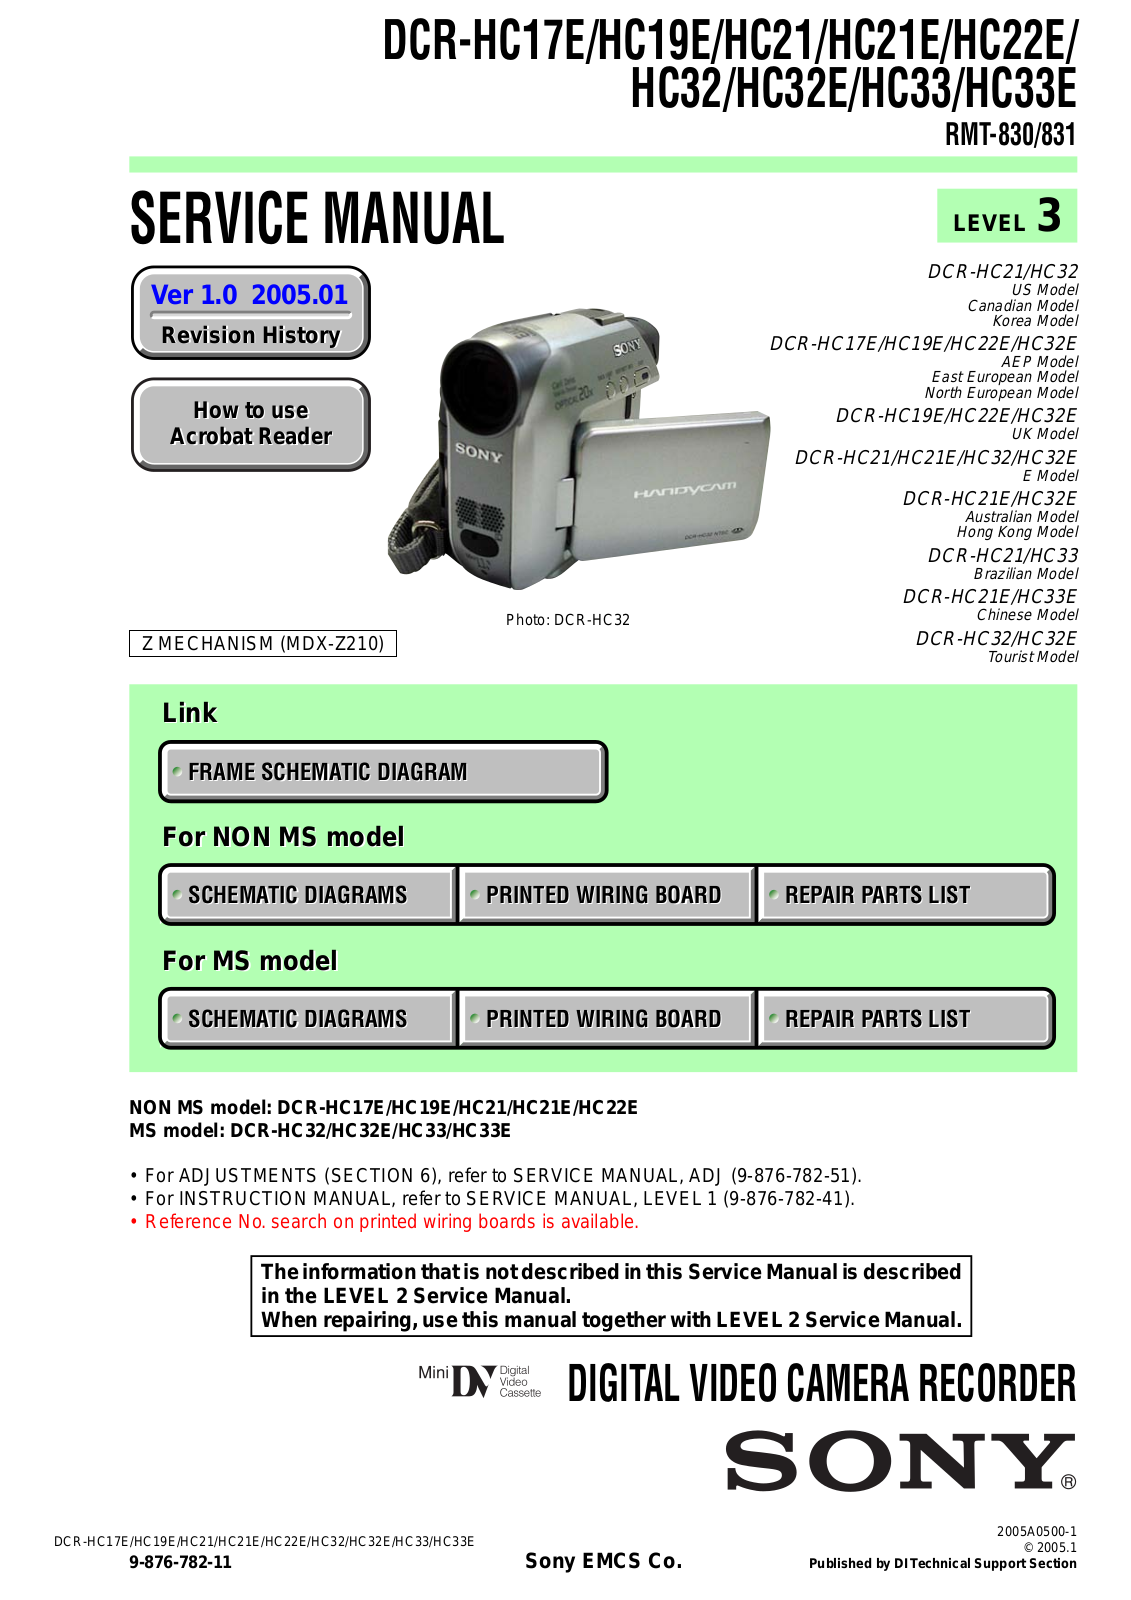 Sony DCR-HC33E, DCR-HC32E, DCR-HC33, DCR-HC21, DCR-HC21E User Manual